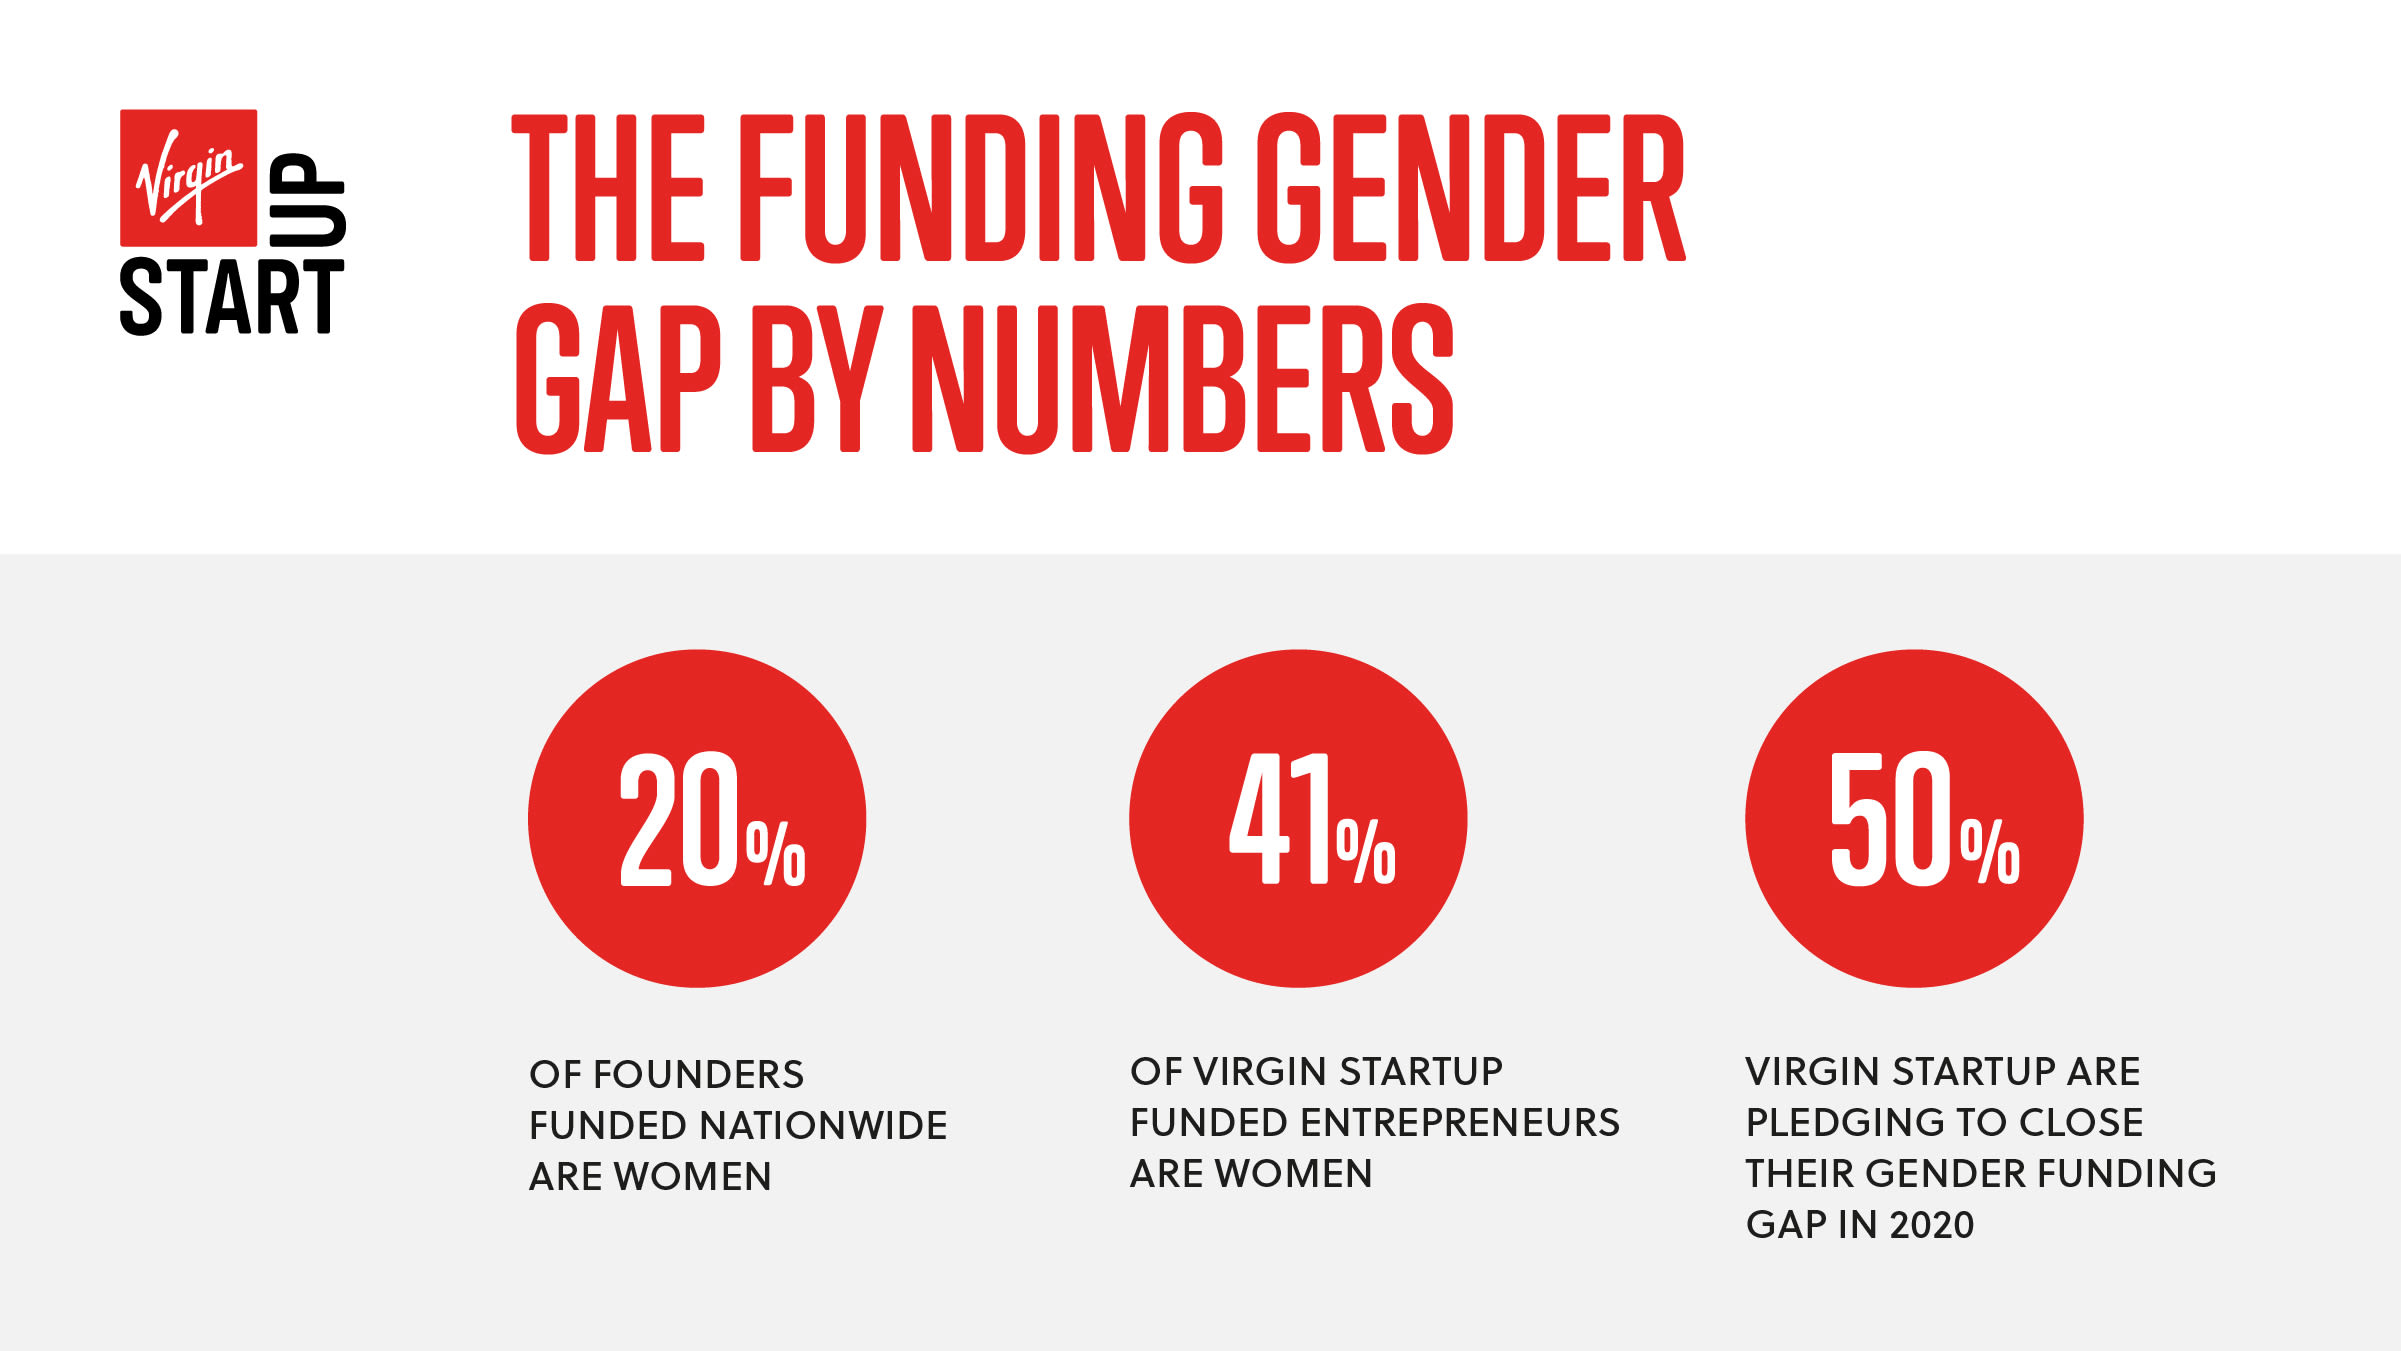 Virgin Startup Diagram in red showing the Funding Gender Gap by Numbers